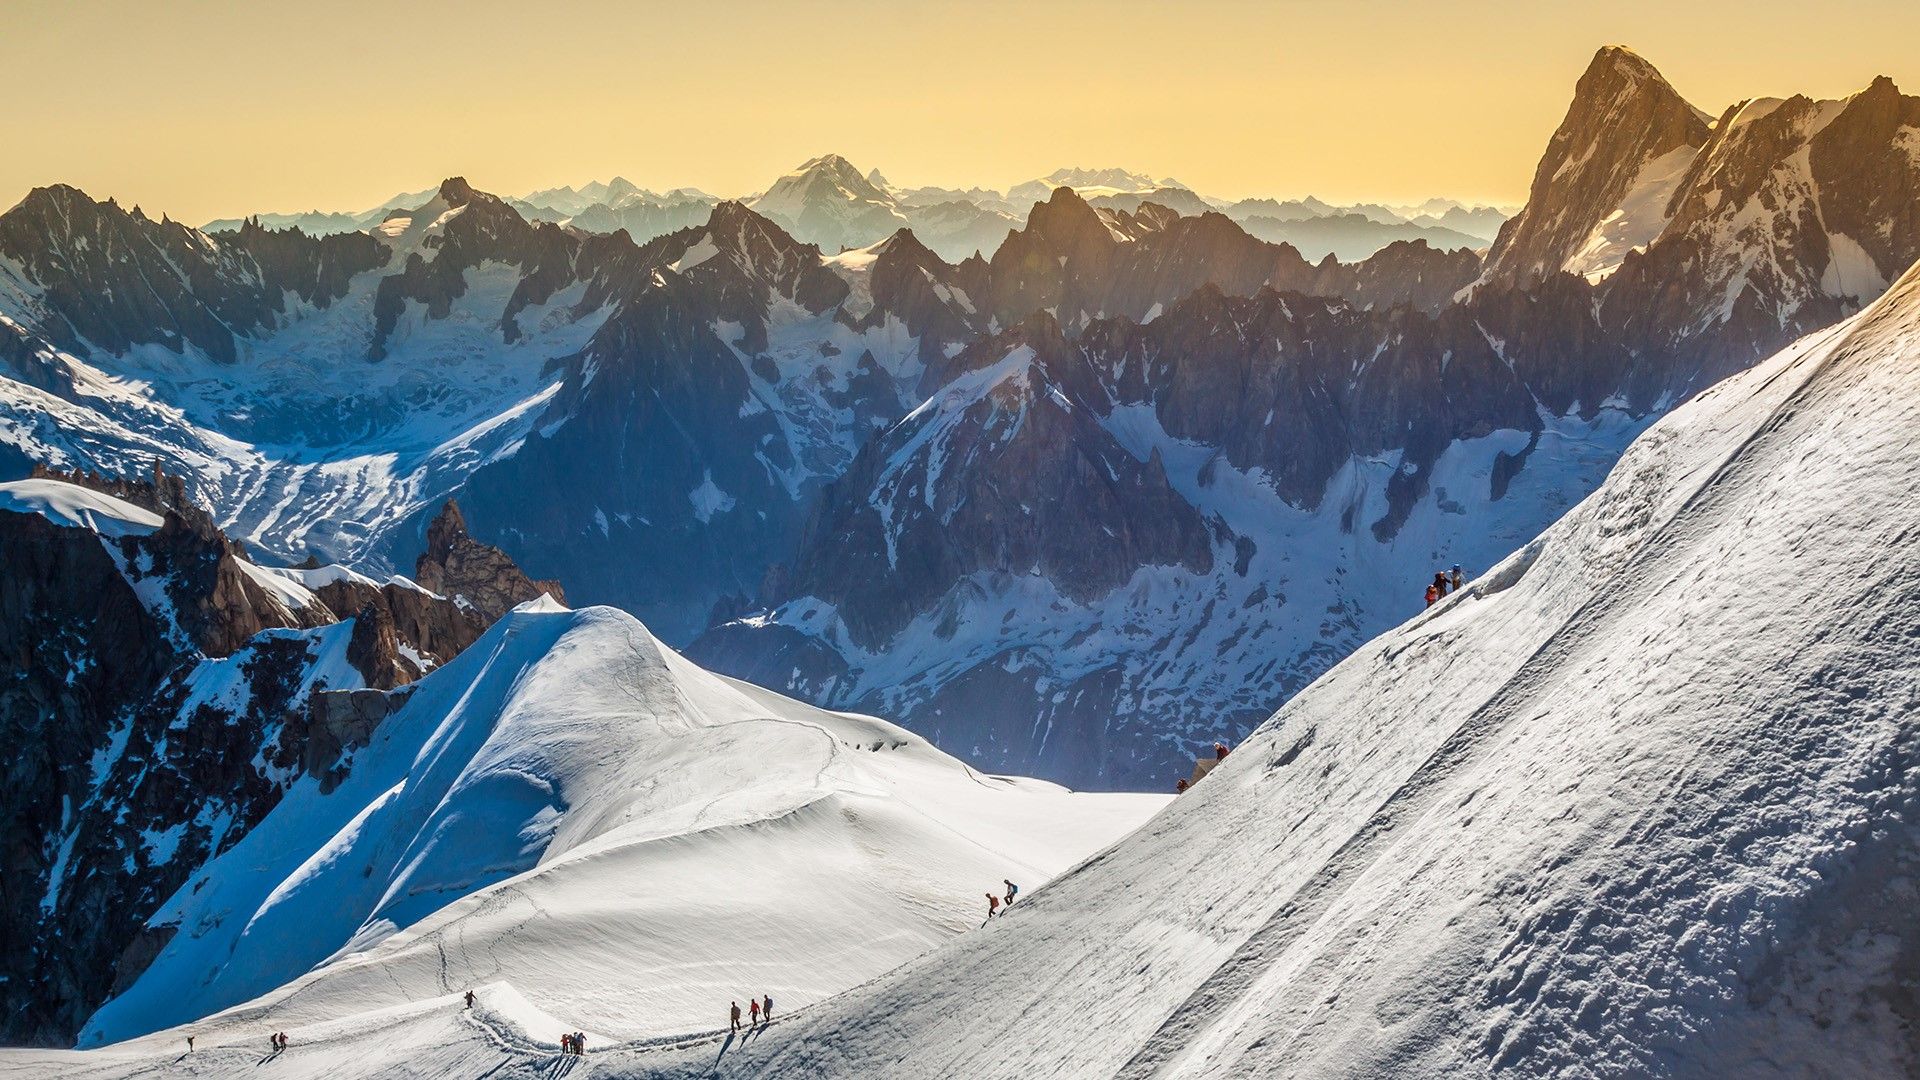 High Mountains Landscape Of Alps, Chamonix Mont Blanc, France. Windows 10 Spotlight Image